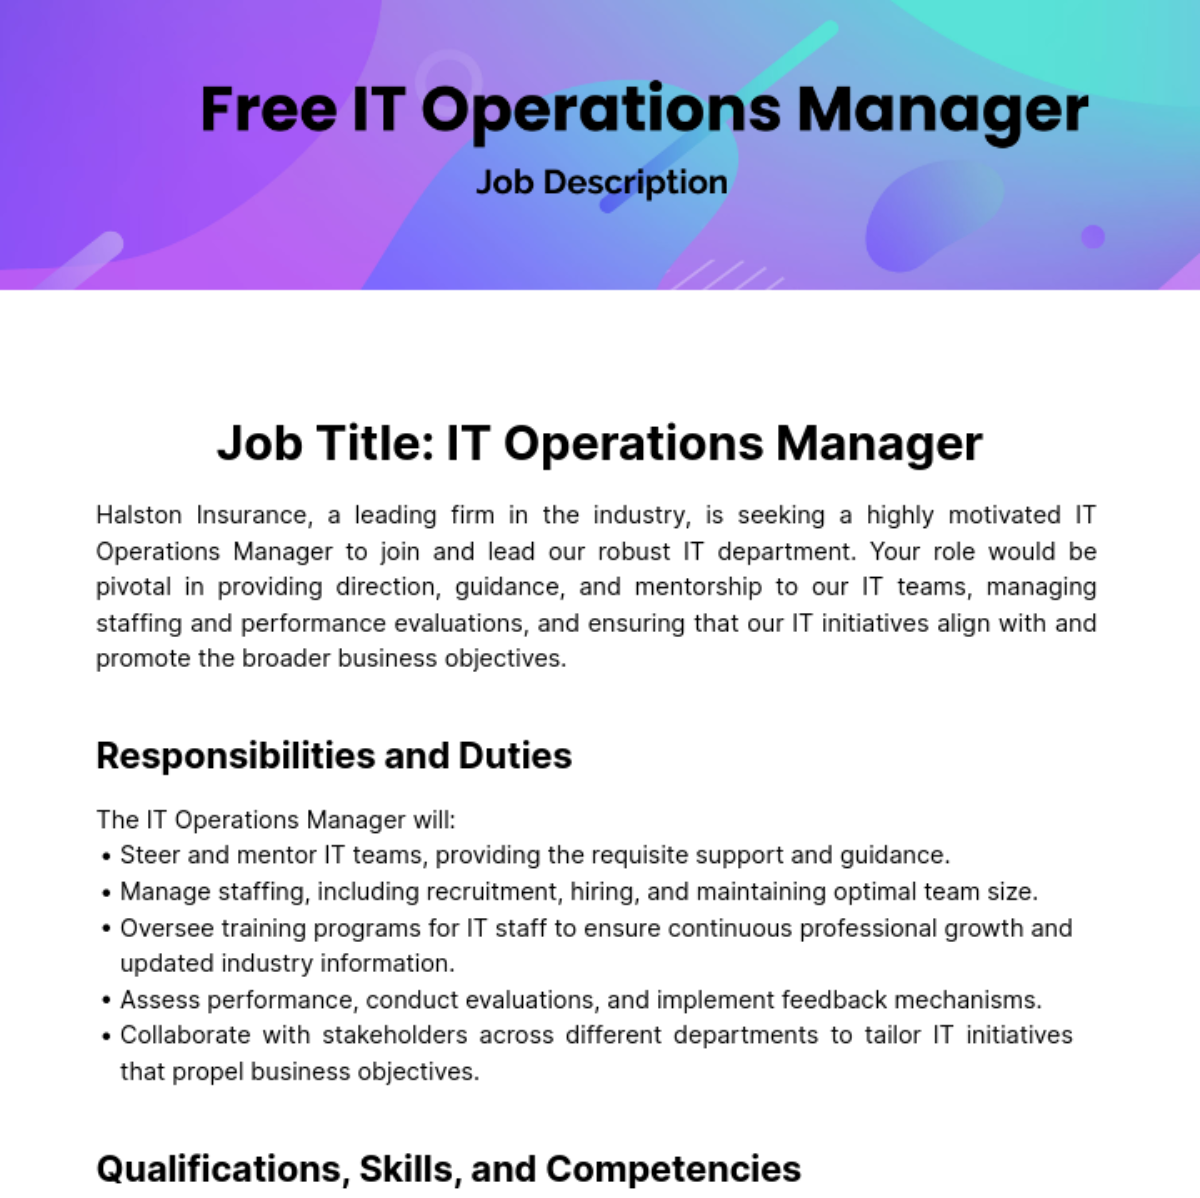 IT Operations Manager Job Description Template